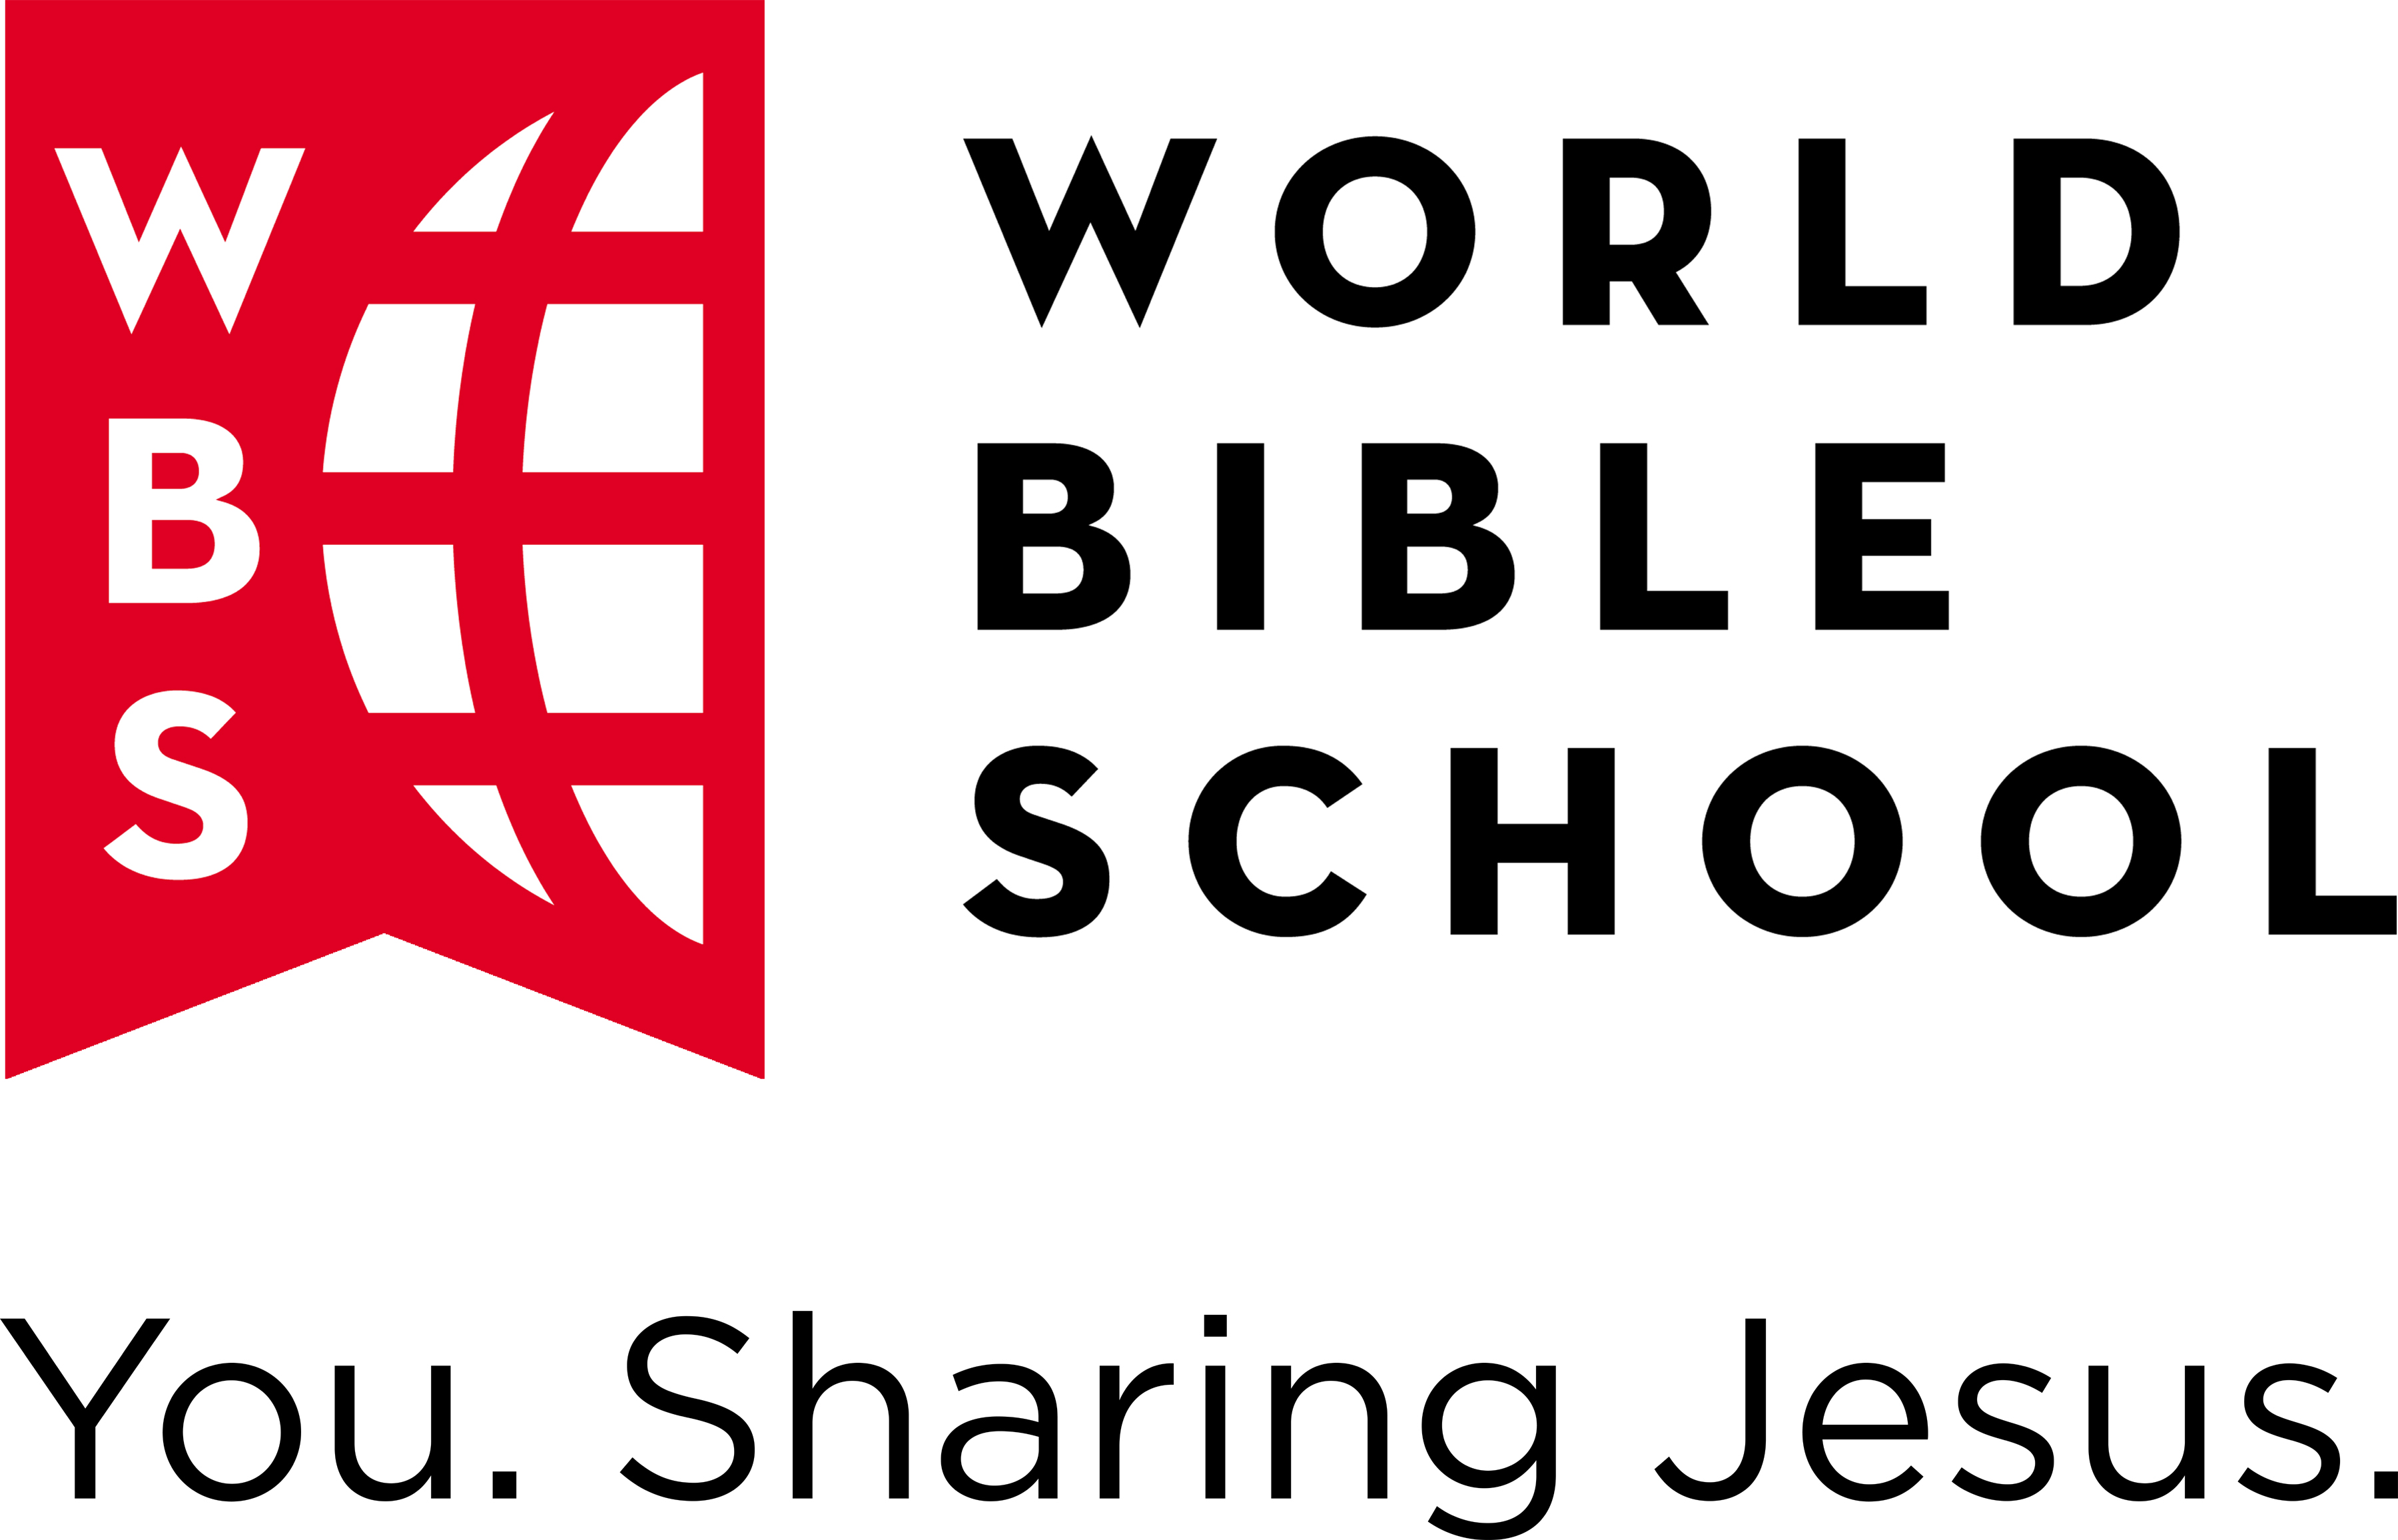 World Bible School